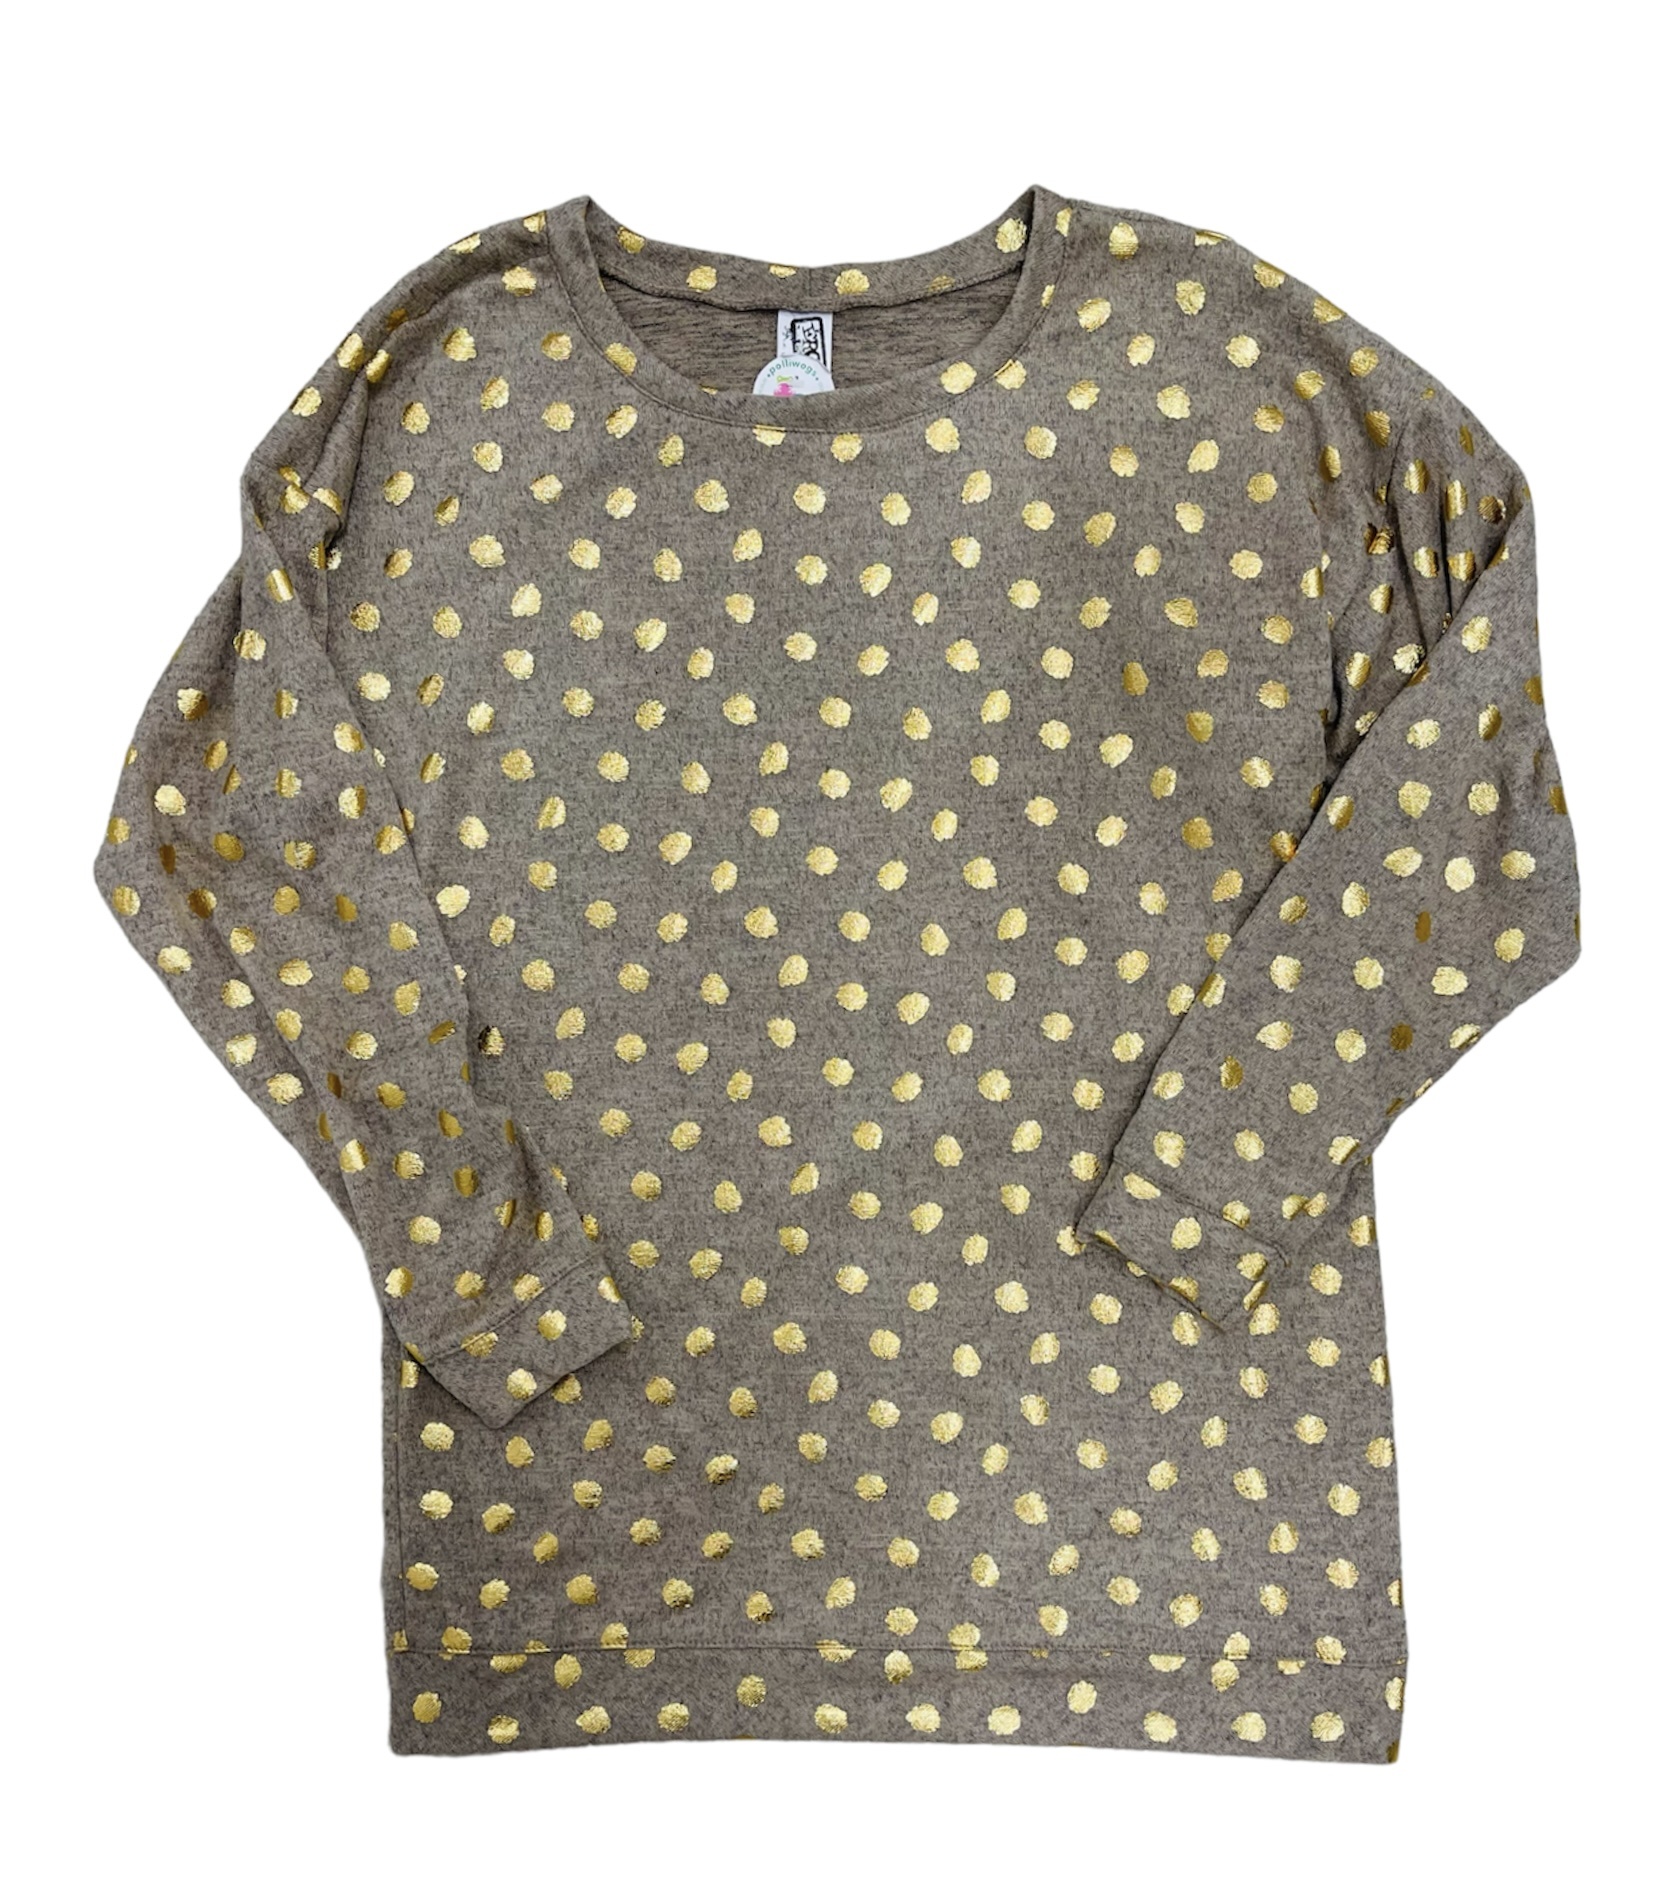 Erge Designs Grey/Gold Dot Sweatshirt Dress